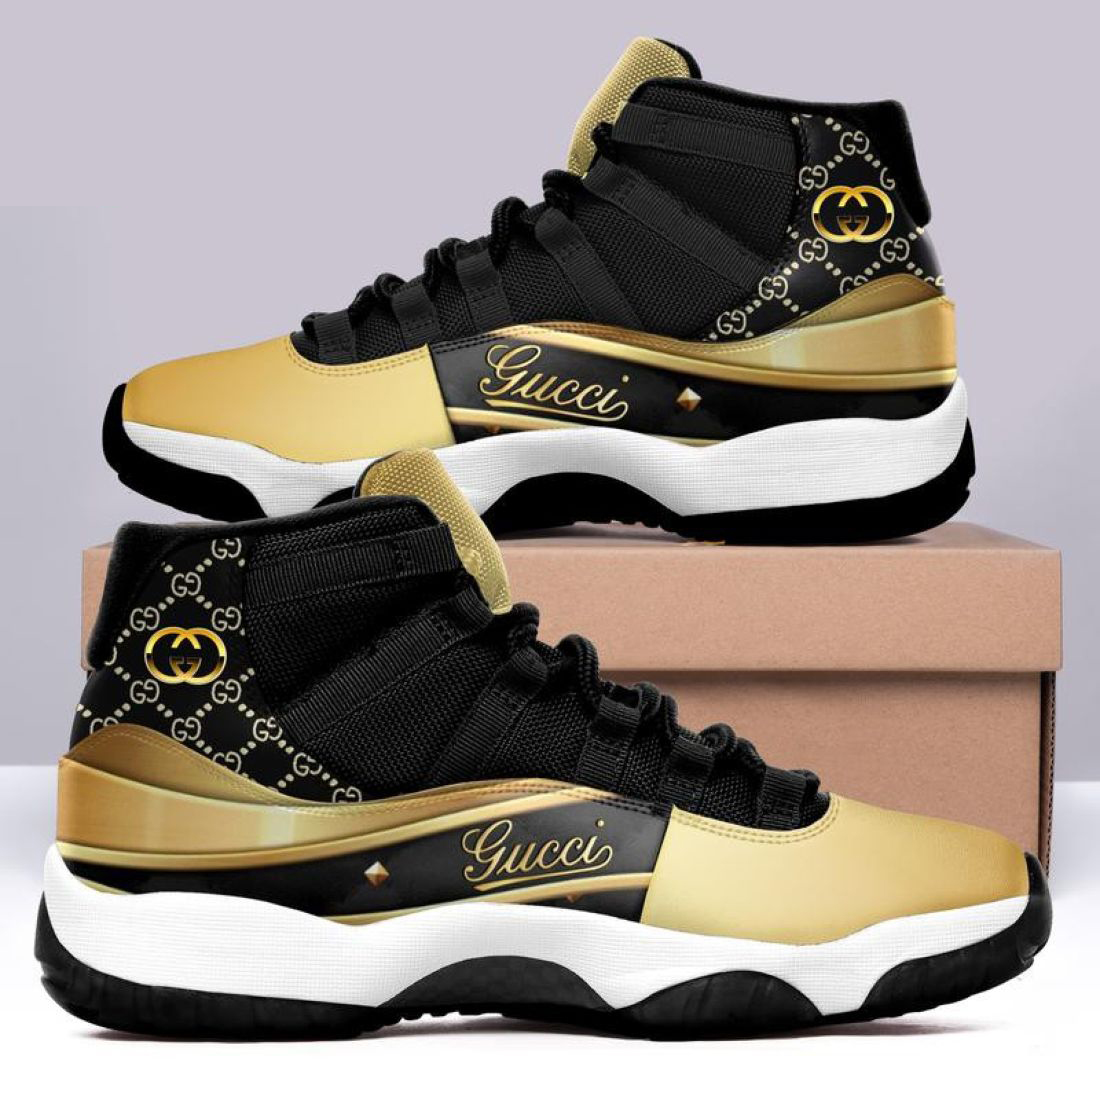 Gucci Black Gold Air Jordan 11 Sneakers Shoes Hot 2022 Gifts For Men Women HT